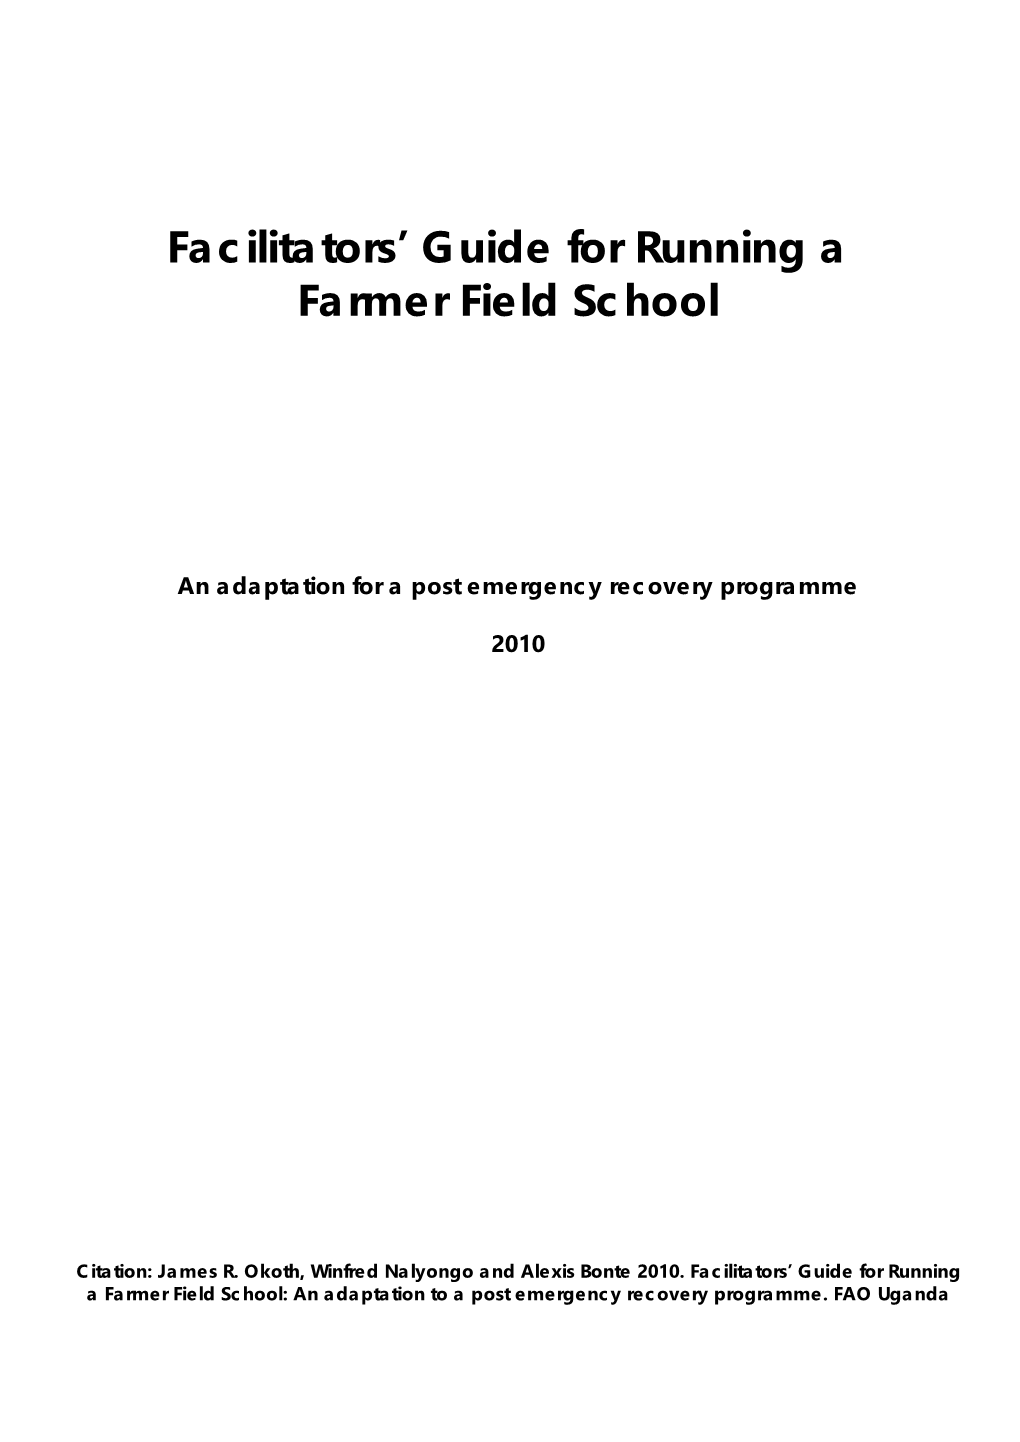 Facilitators' Guide for Running a Farmer Field School